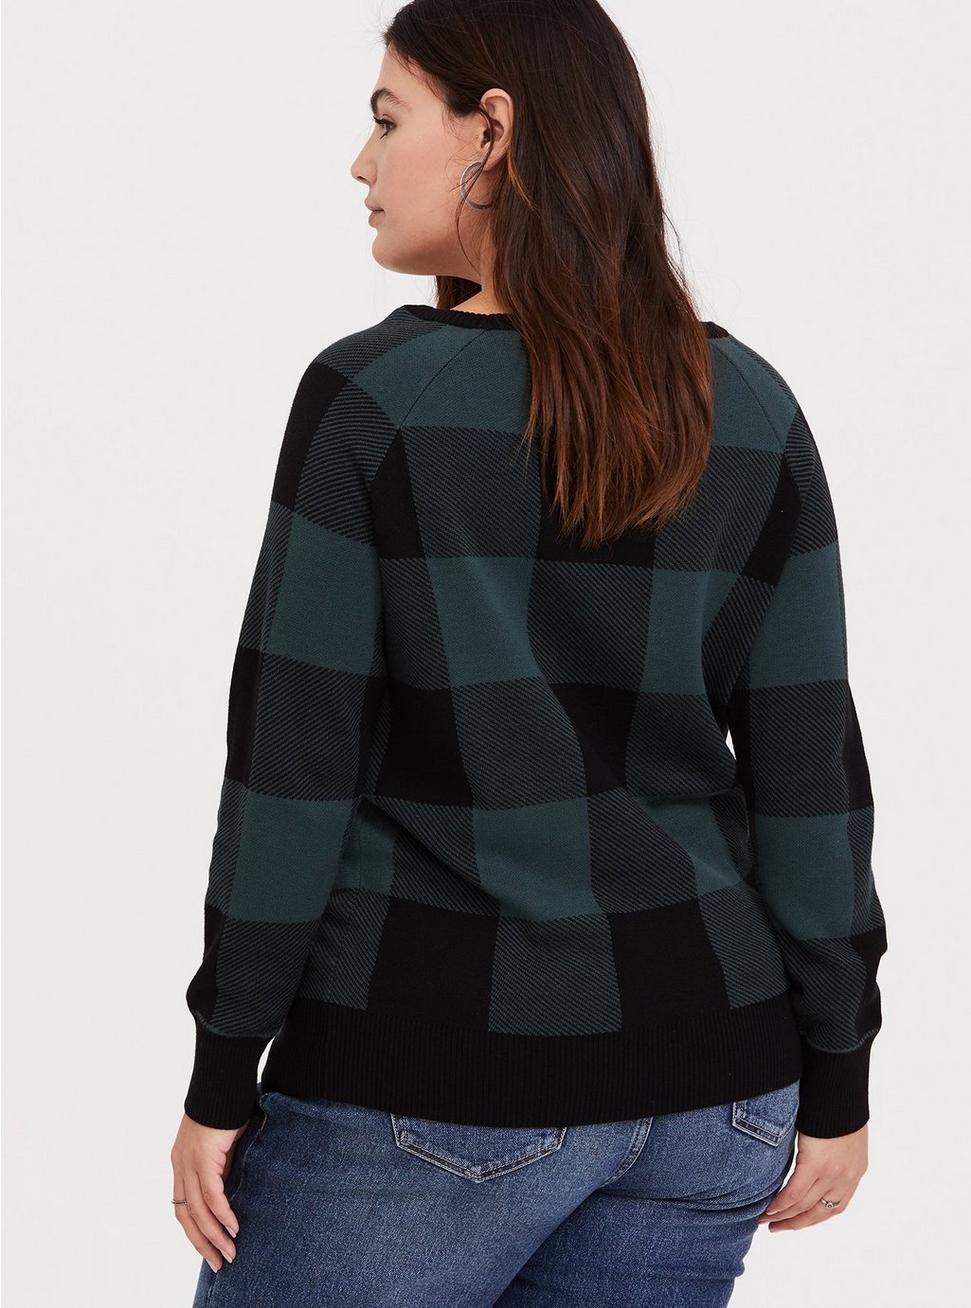 Plus Size - Green & Black Jacquard Plaid Pullover Sweater - Torrid